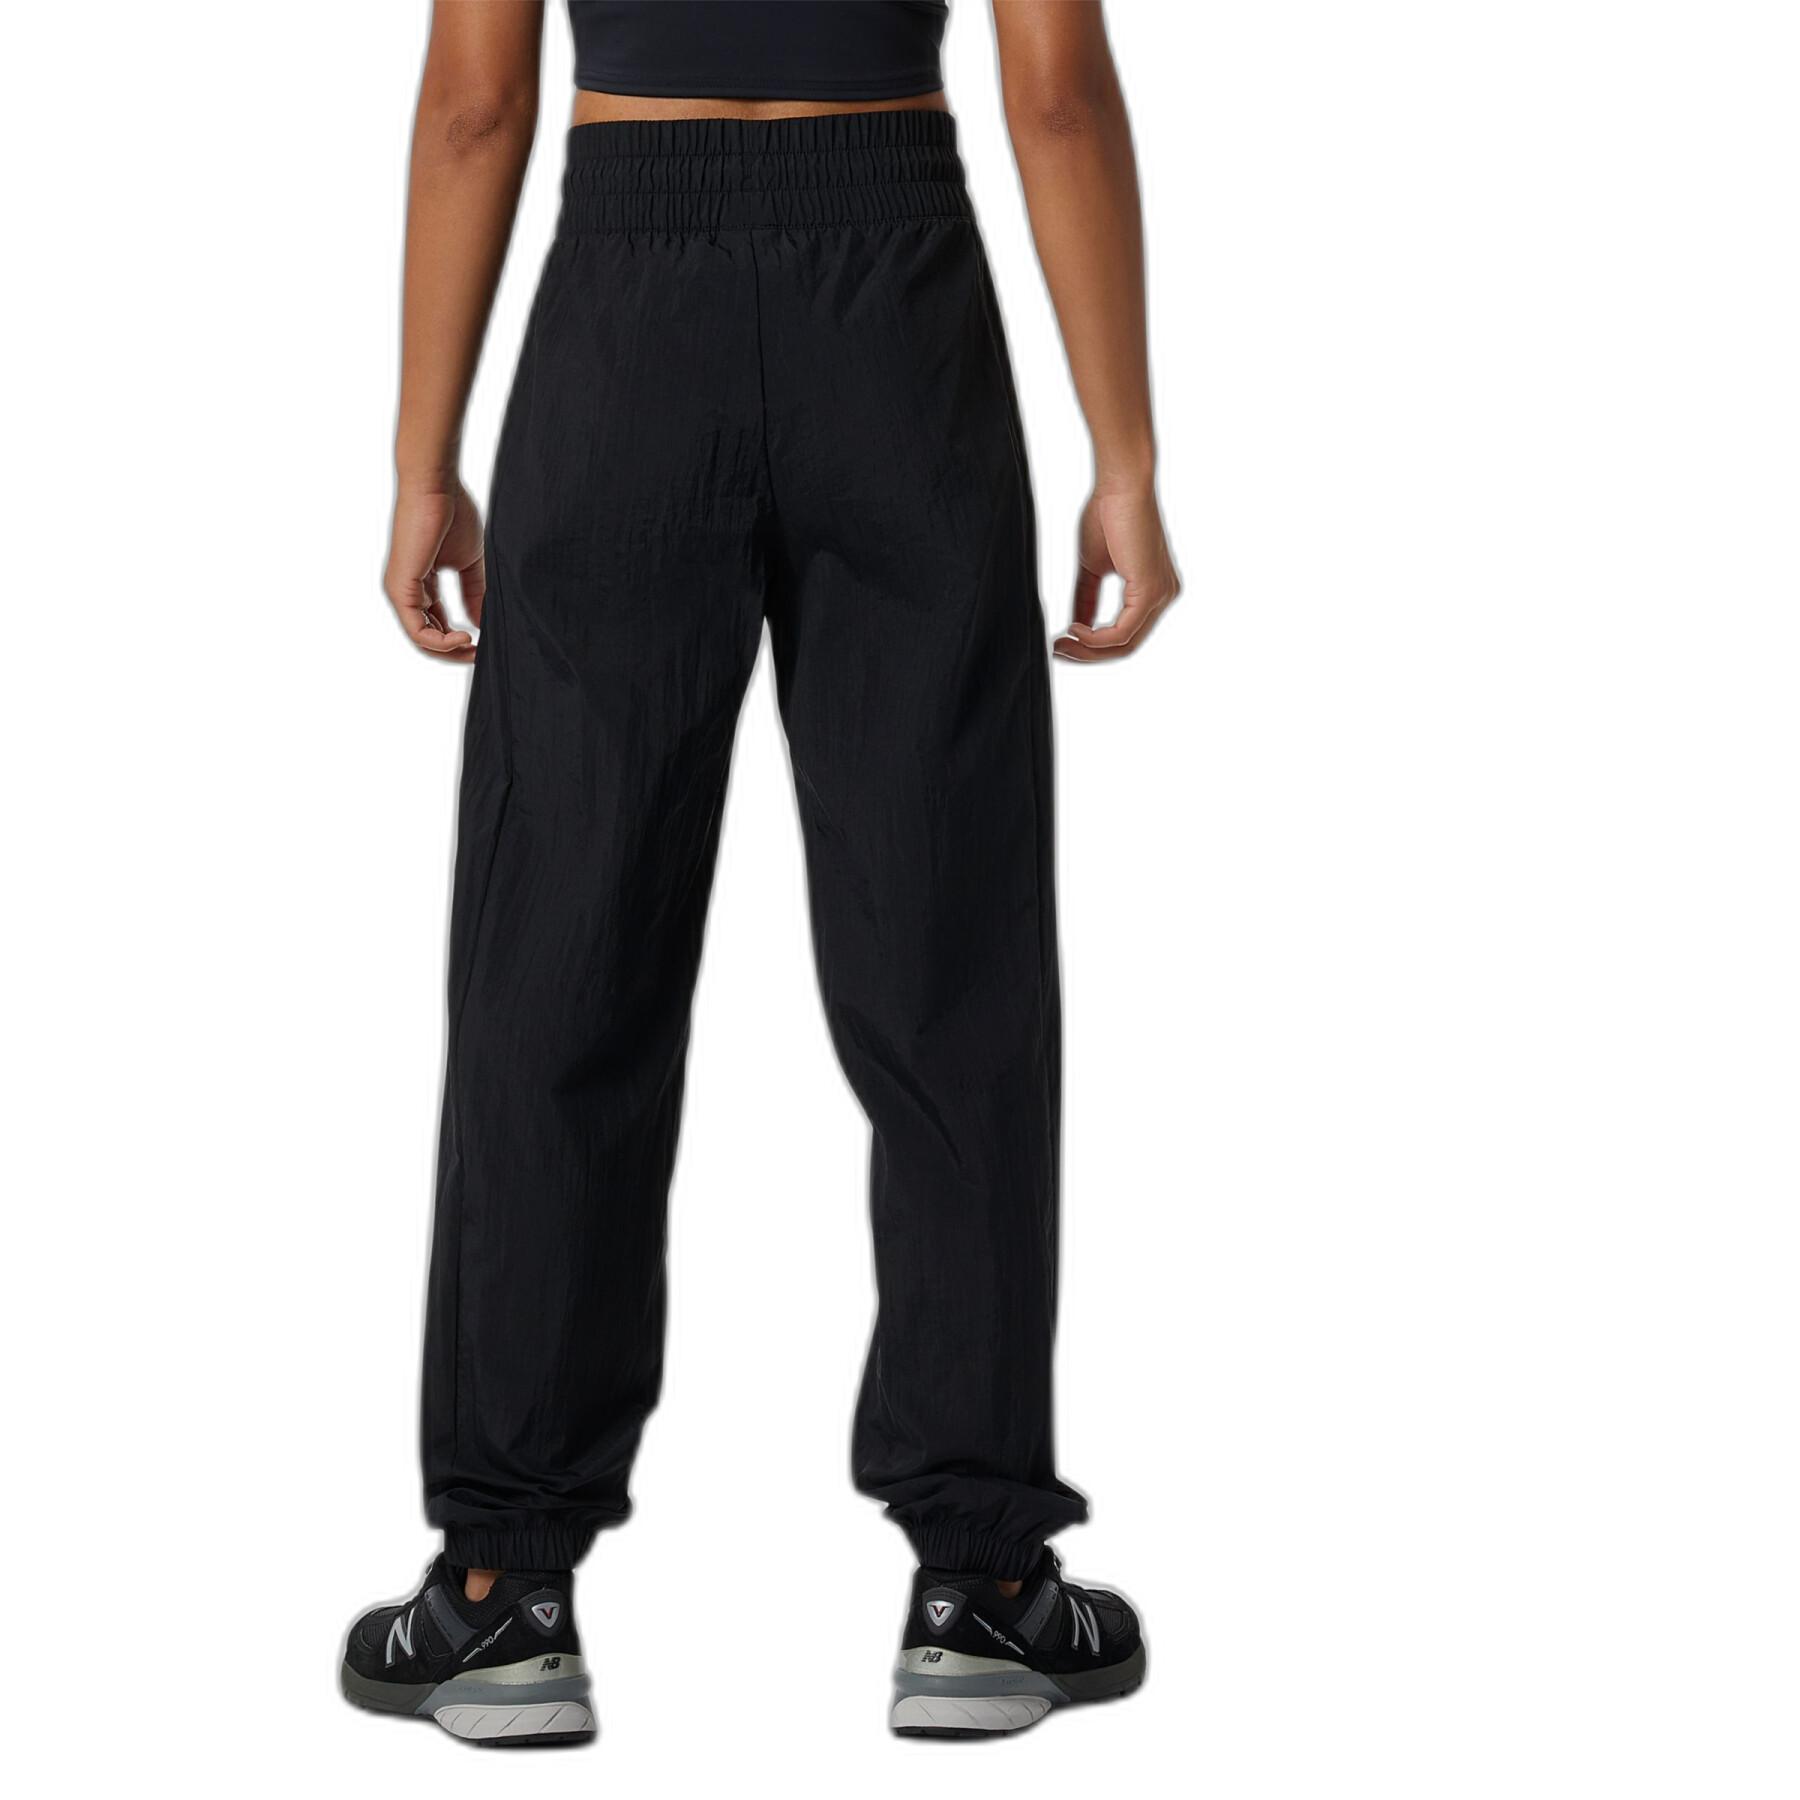 Damski new balance athletics amplified woven jogging suit